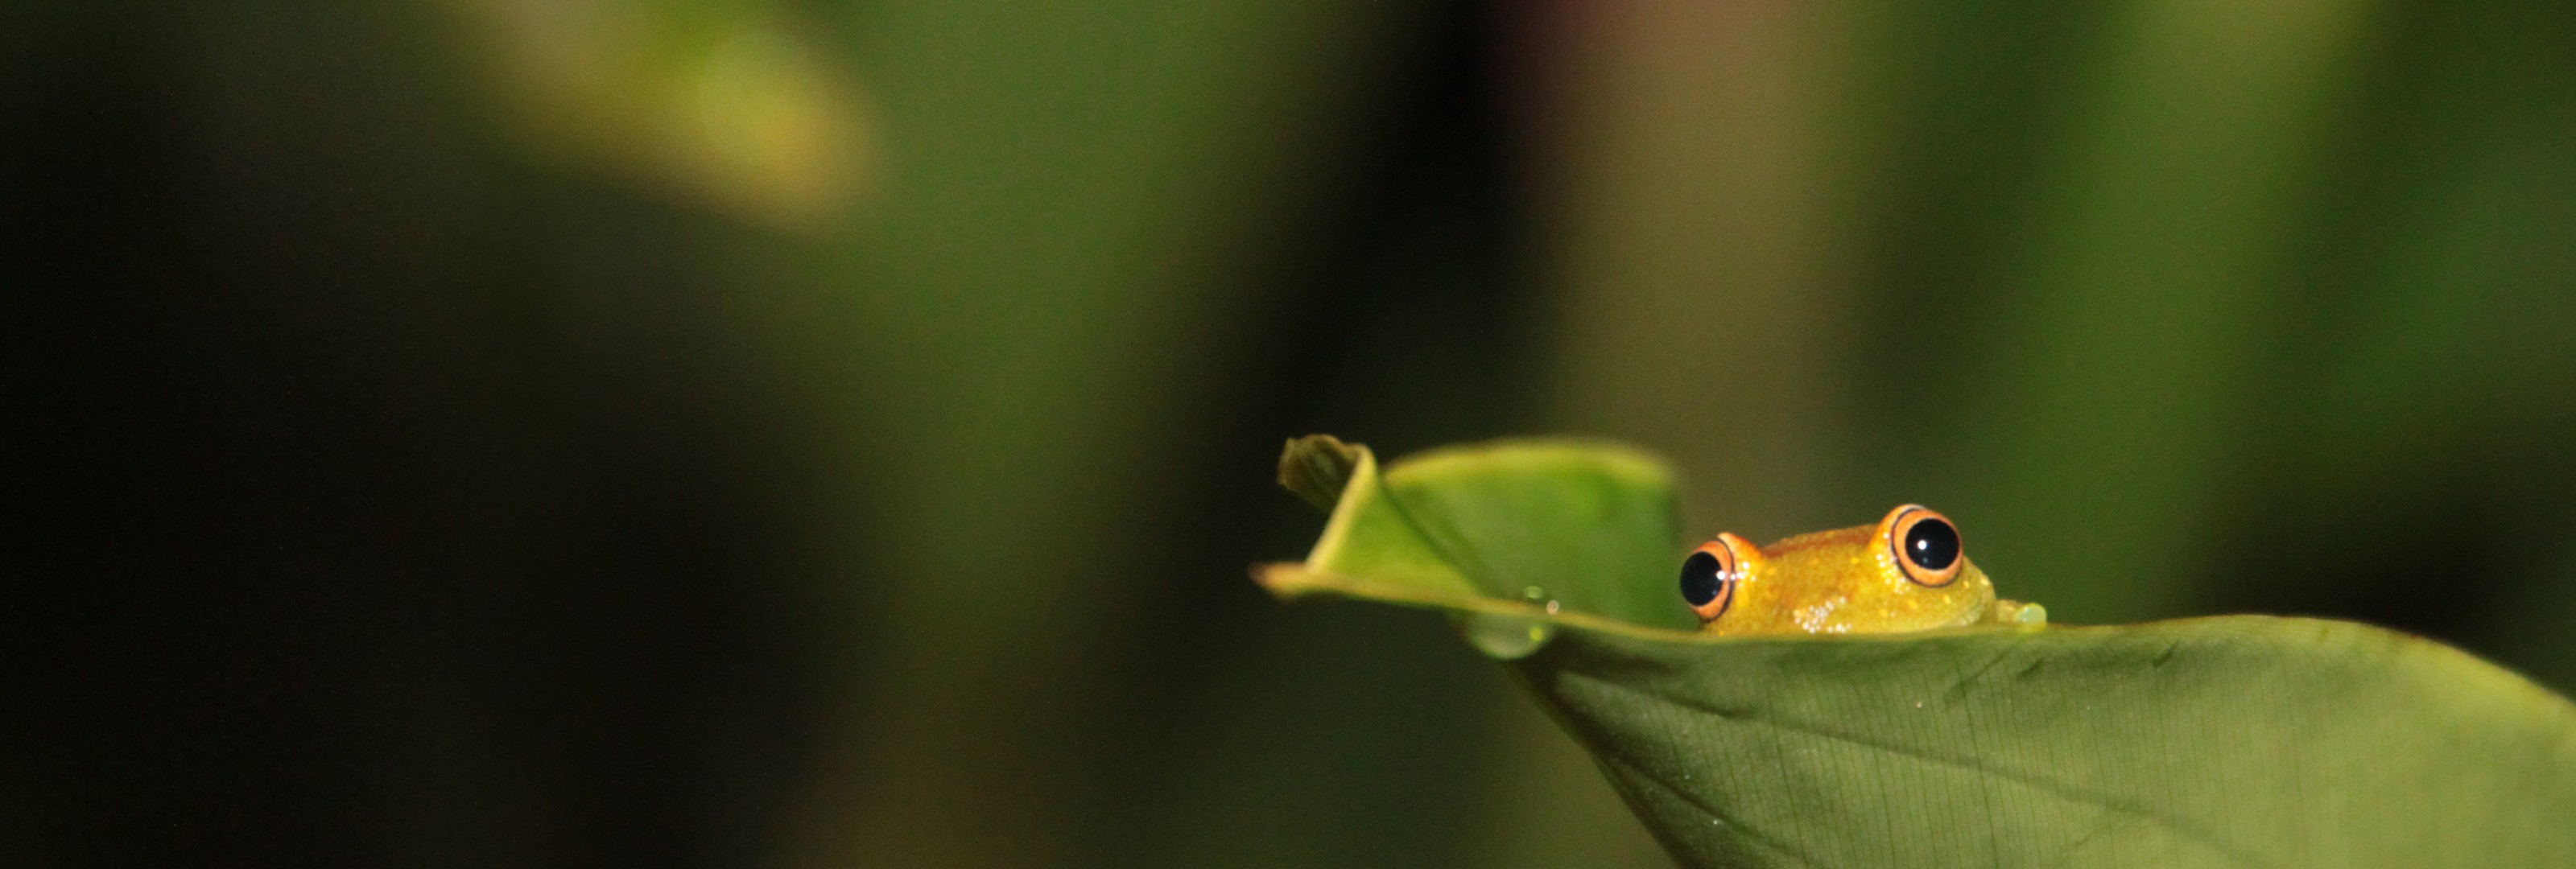 General 3200x1080 frog macro blurred leaves photography animals amphibian plants green background animal eyes